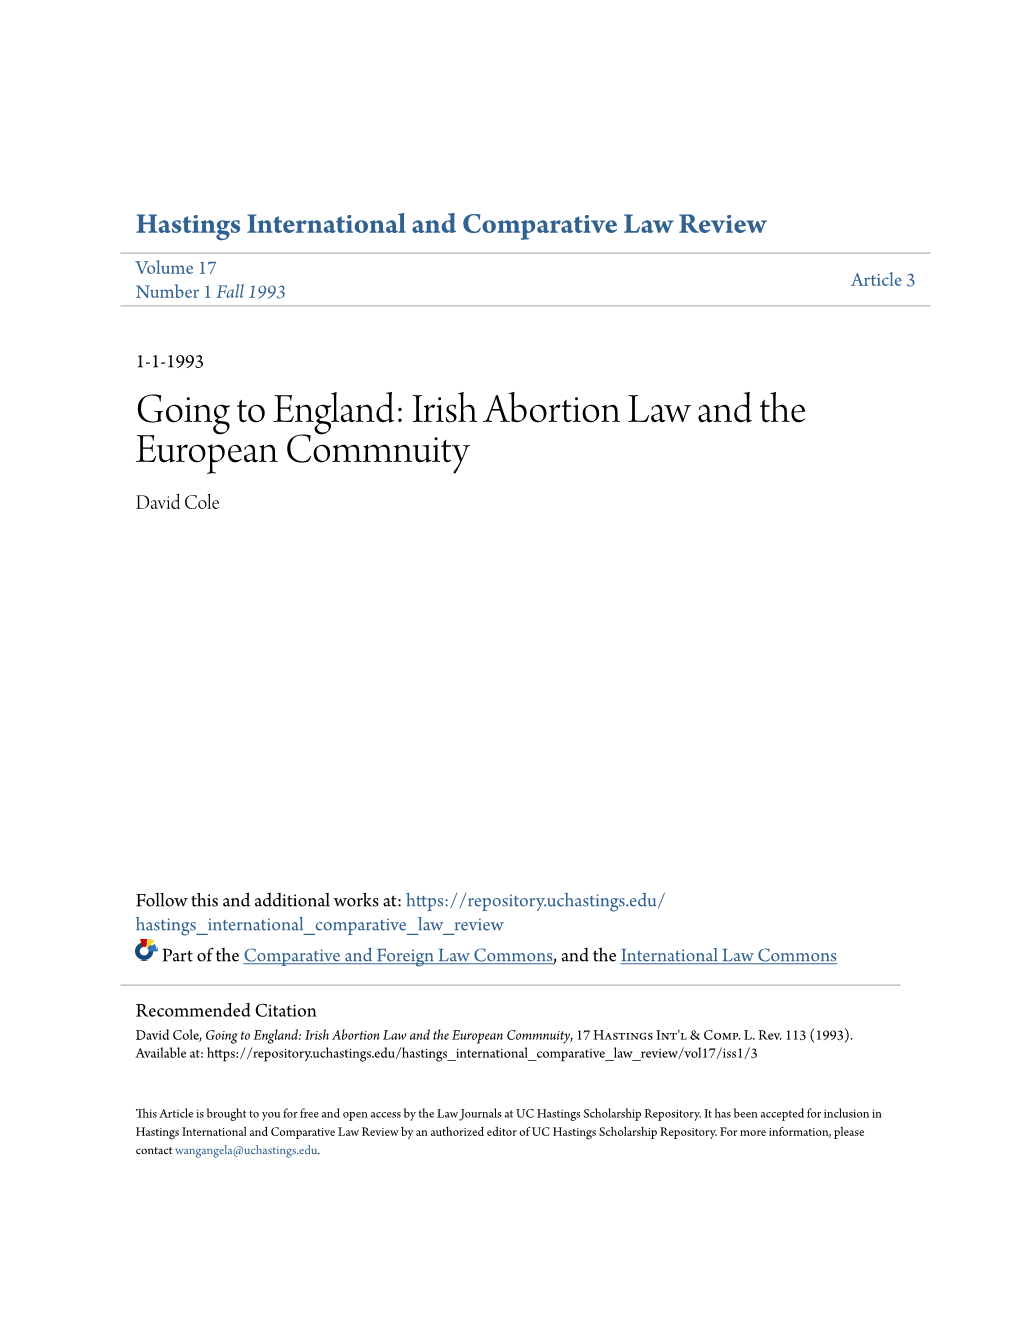 Irish Abortion Law and the European Commnuity David Cole